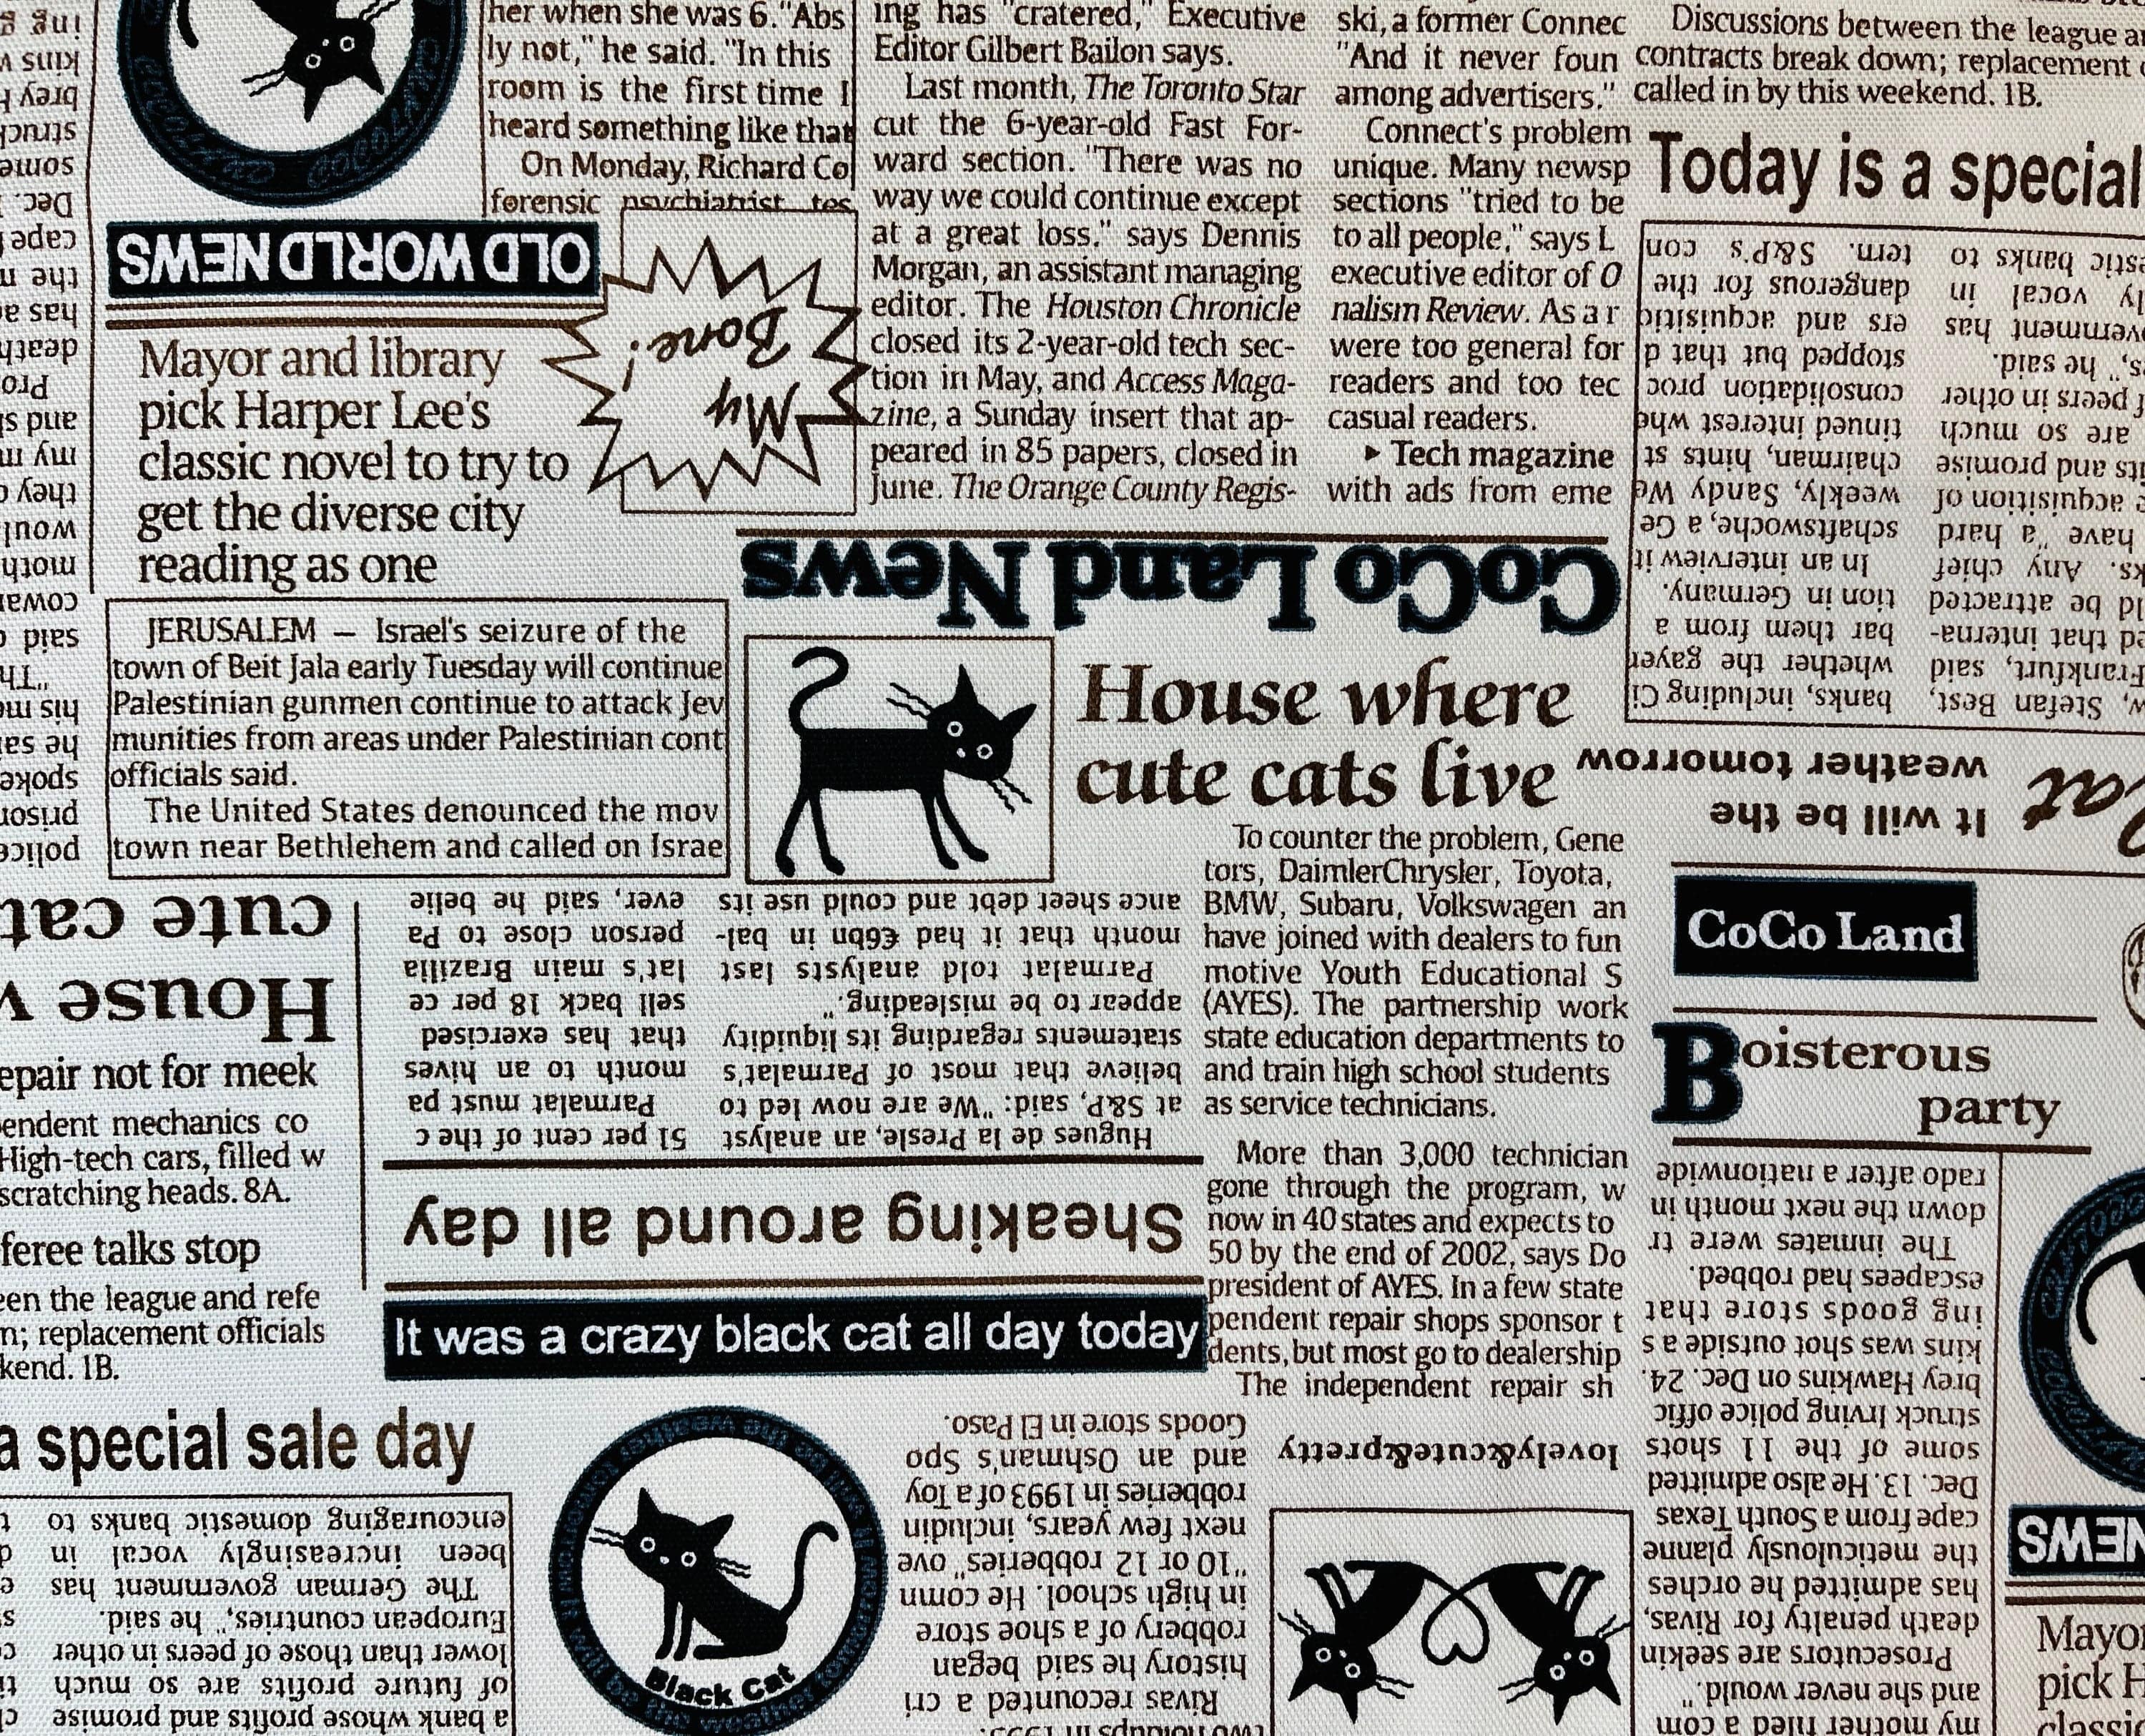 Cat - Newspaper - Lightweight Canvas - Black - White - Brown - Newspaper Fabric - Japanese Fabric - Canvas Cotton Fabric - H-CO-10002-23B